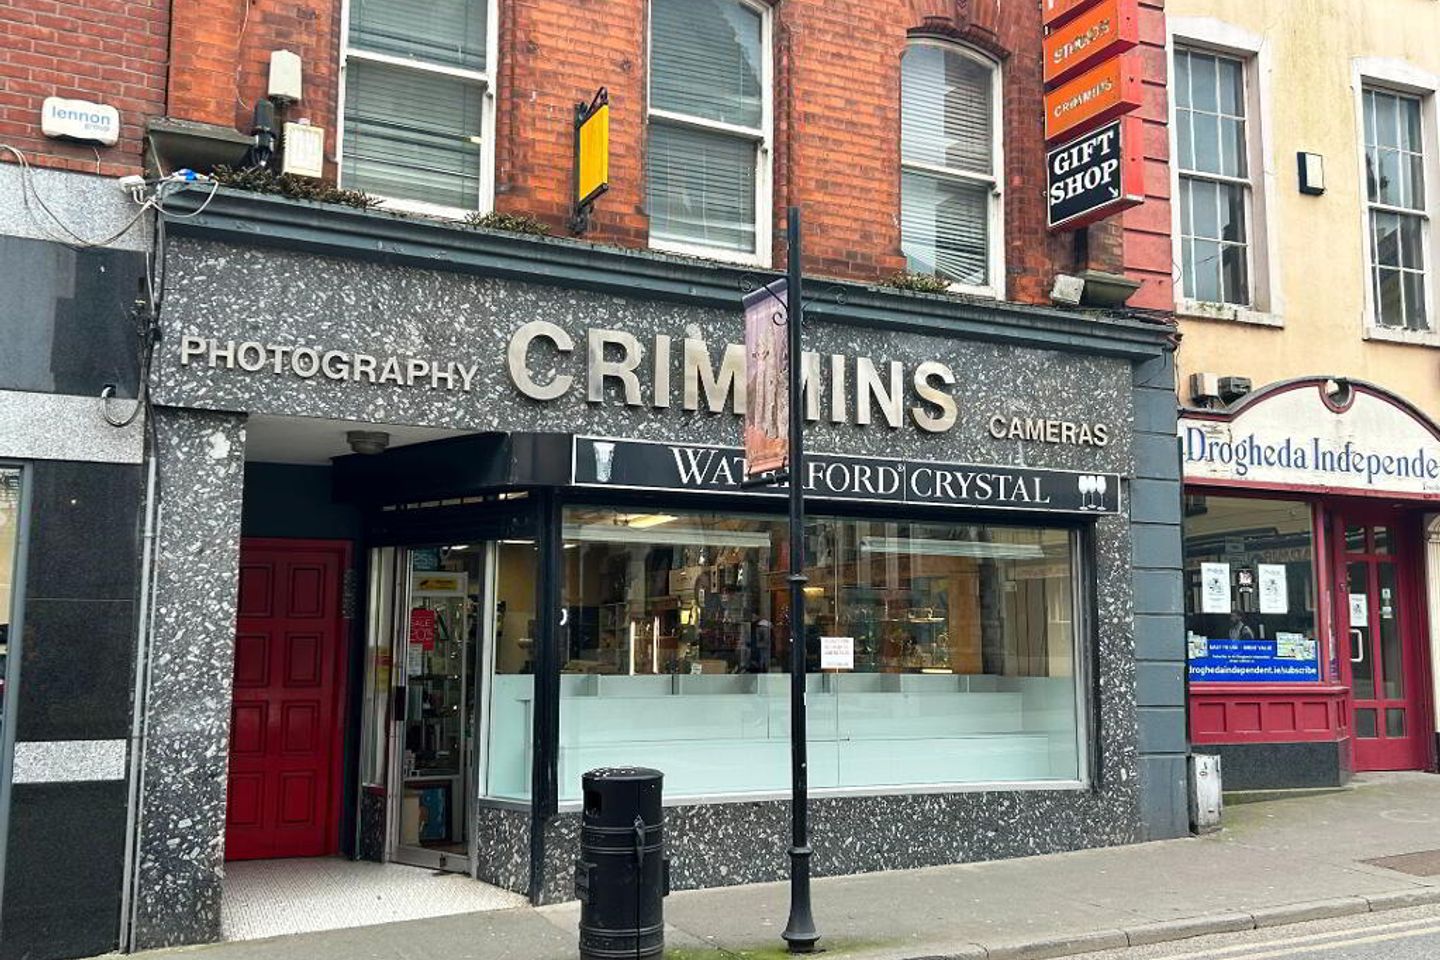 Former "Crimmins Giftware", 10 Shop Street, Drogheda, Co. Louth